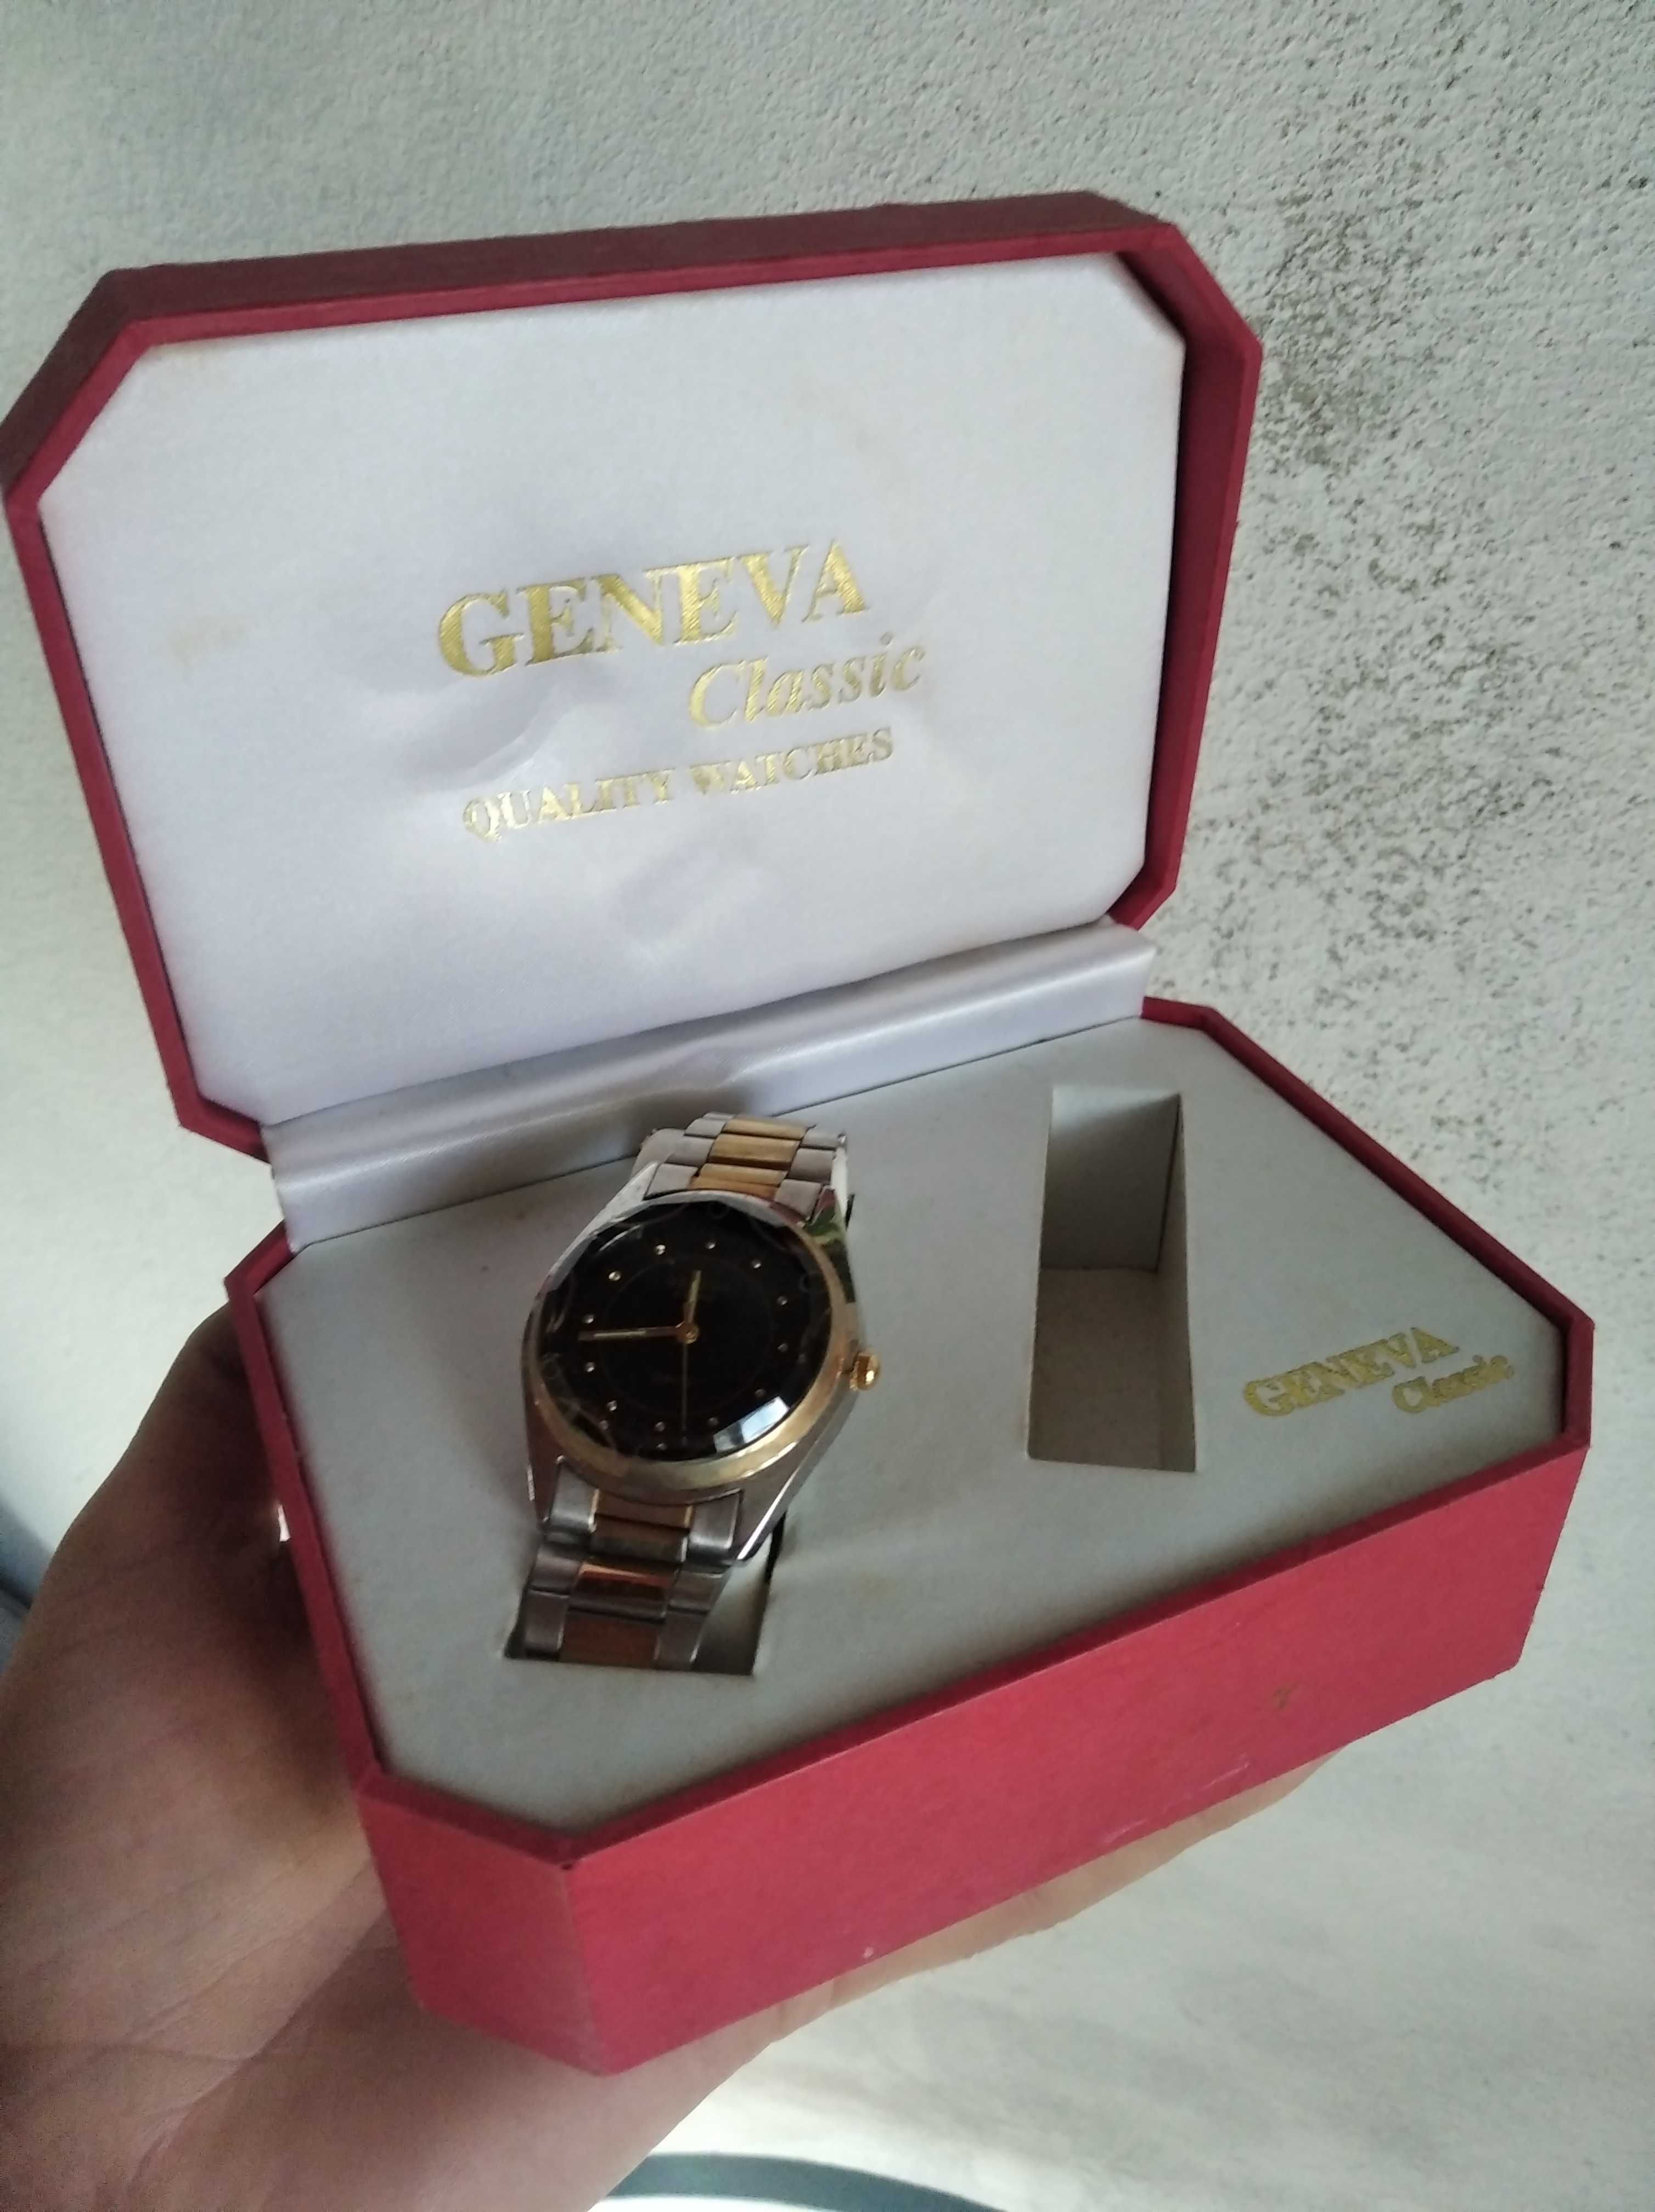 Relógio Geneva clássico